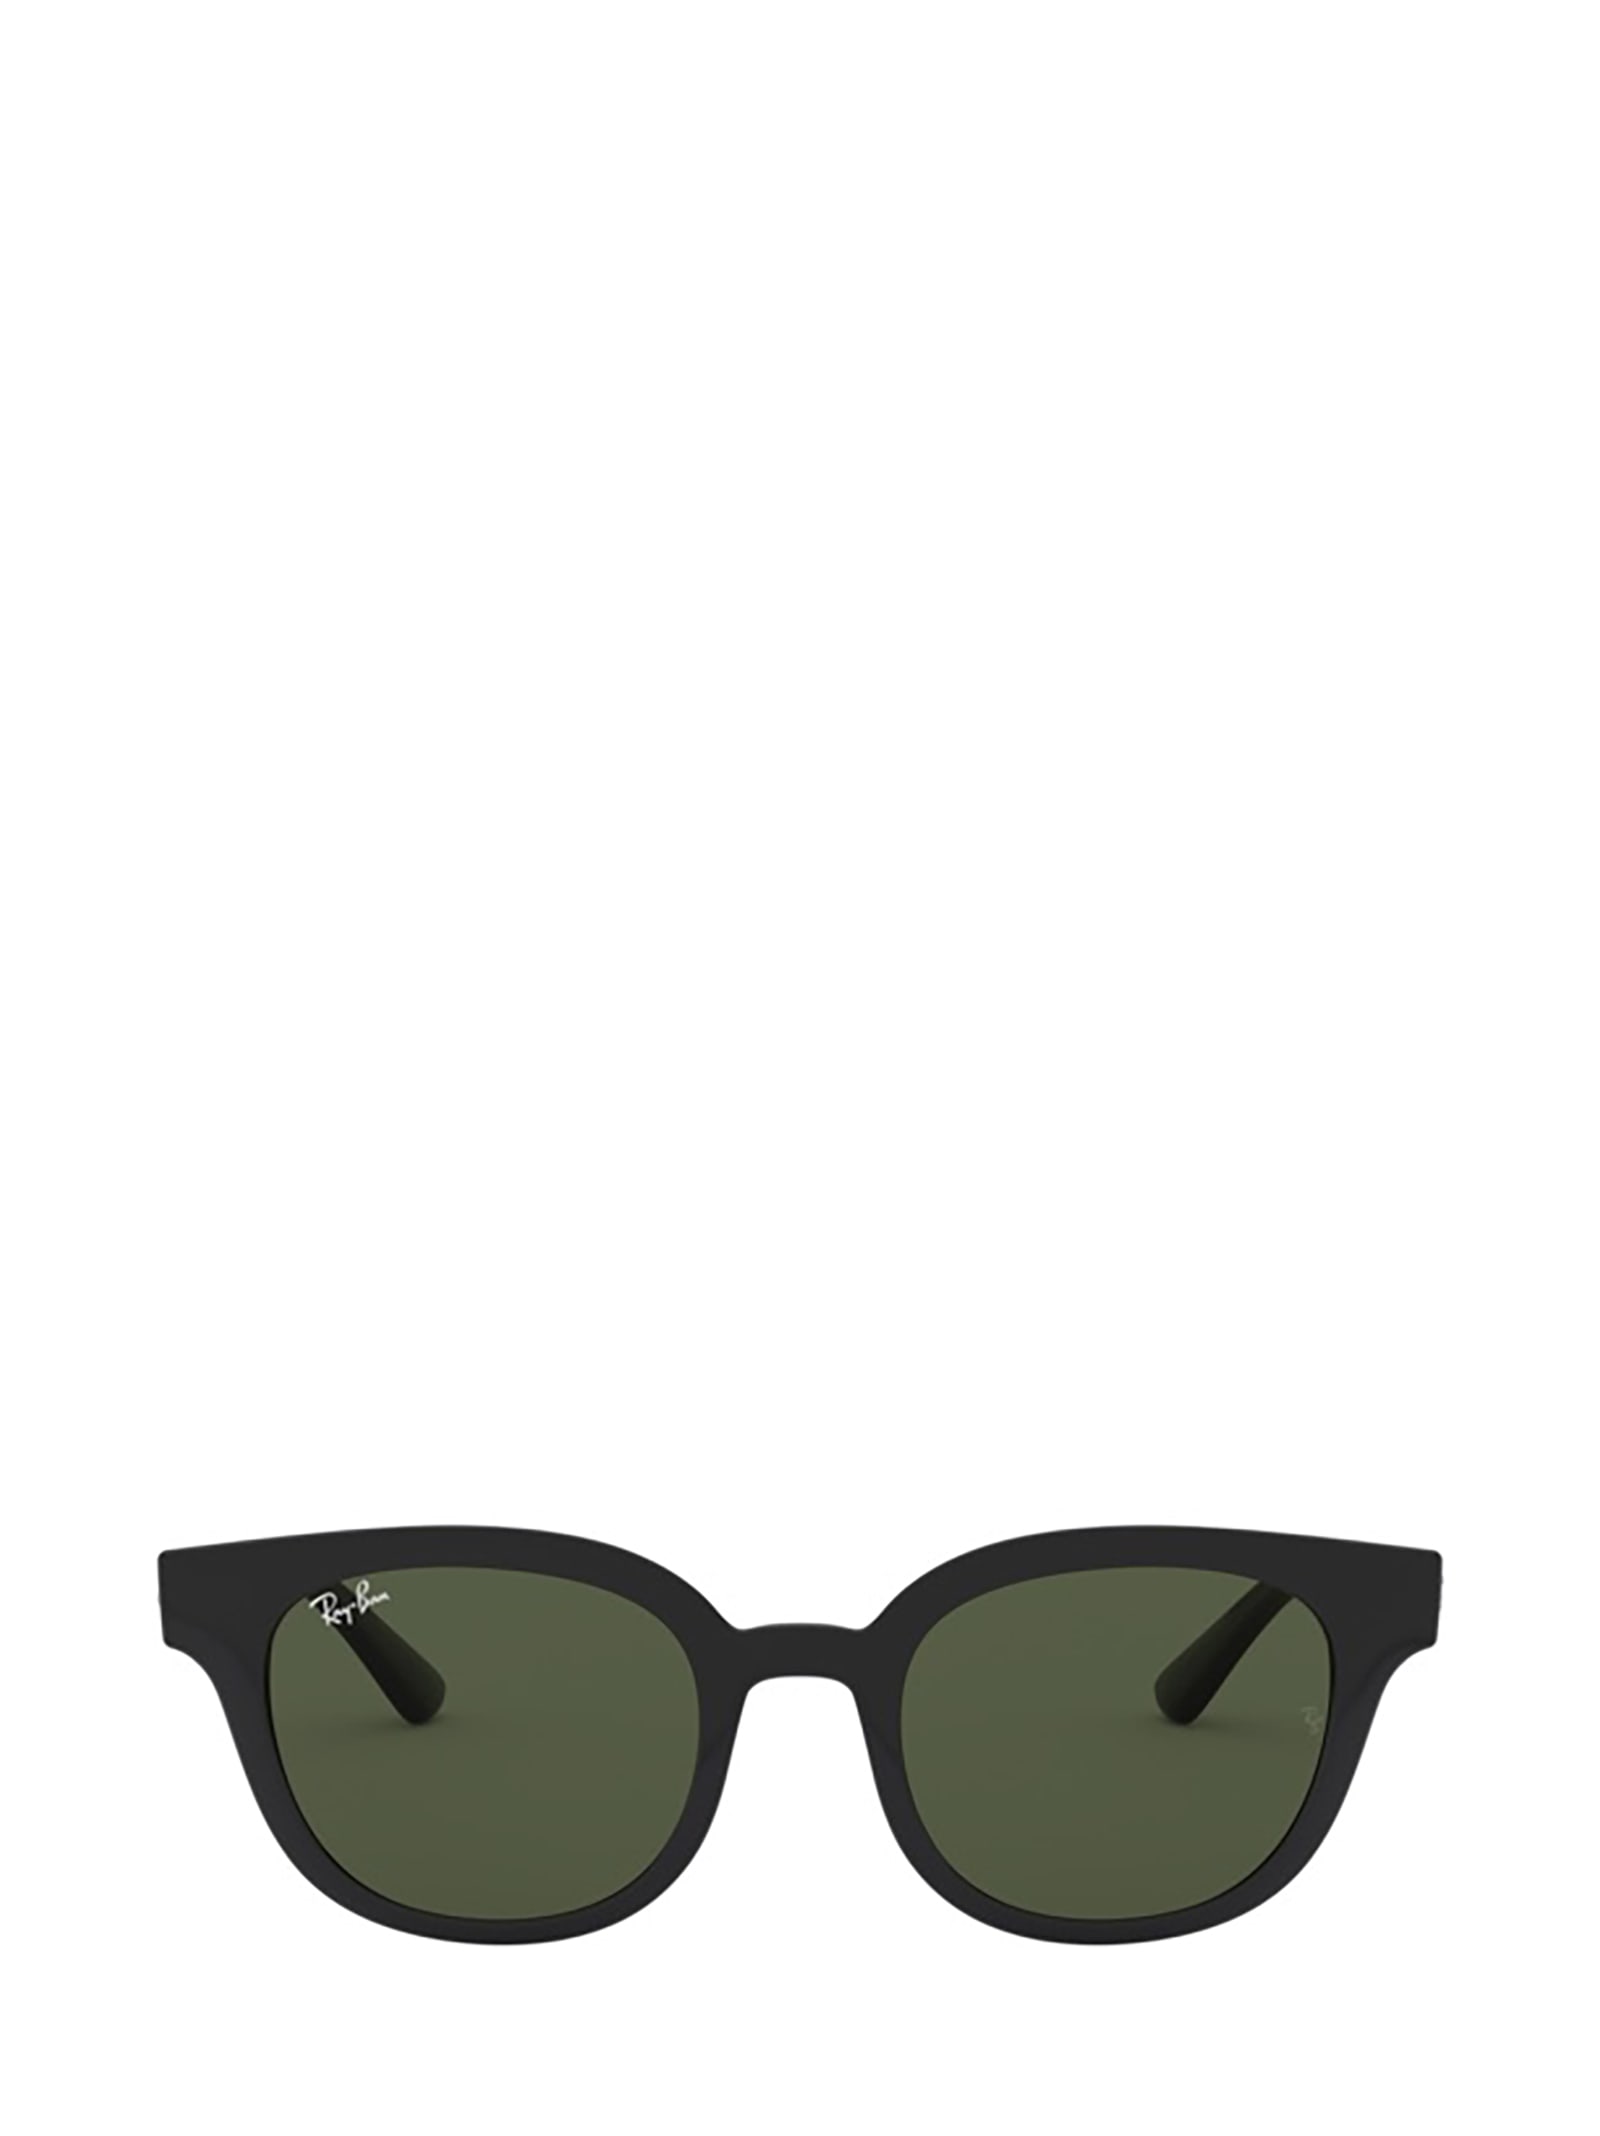 Ray-Ban Ray-ban Rb4324 Black Sunglasses